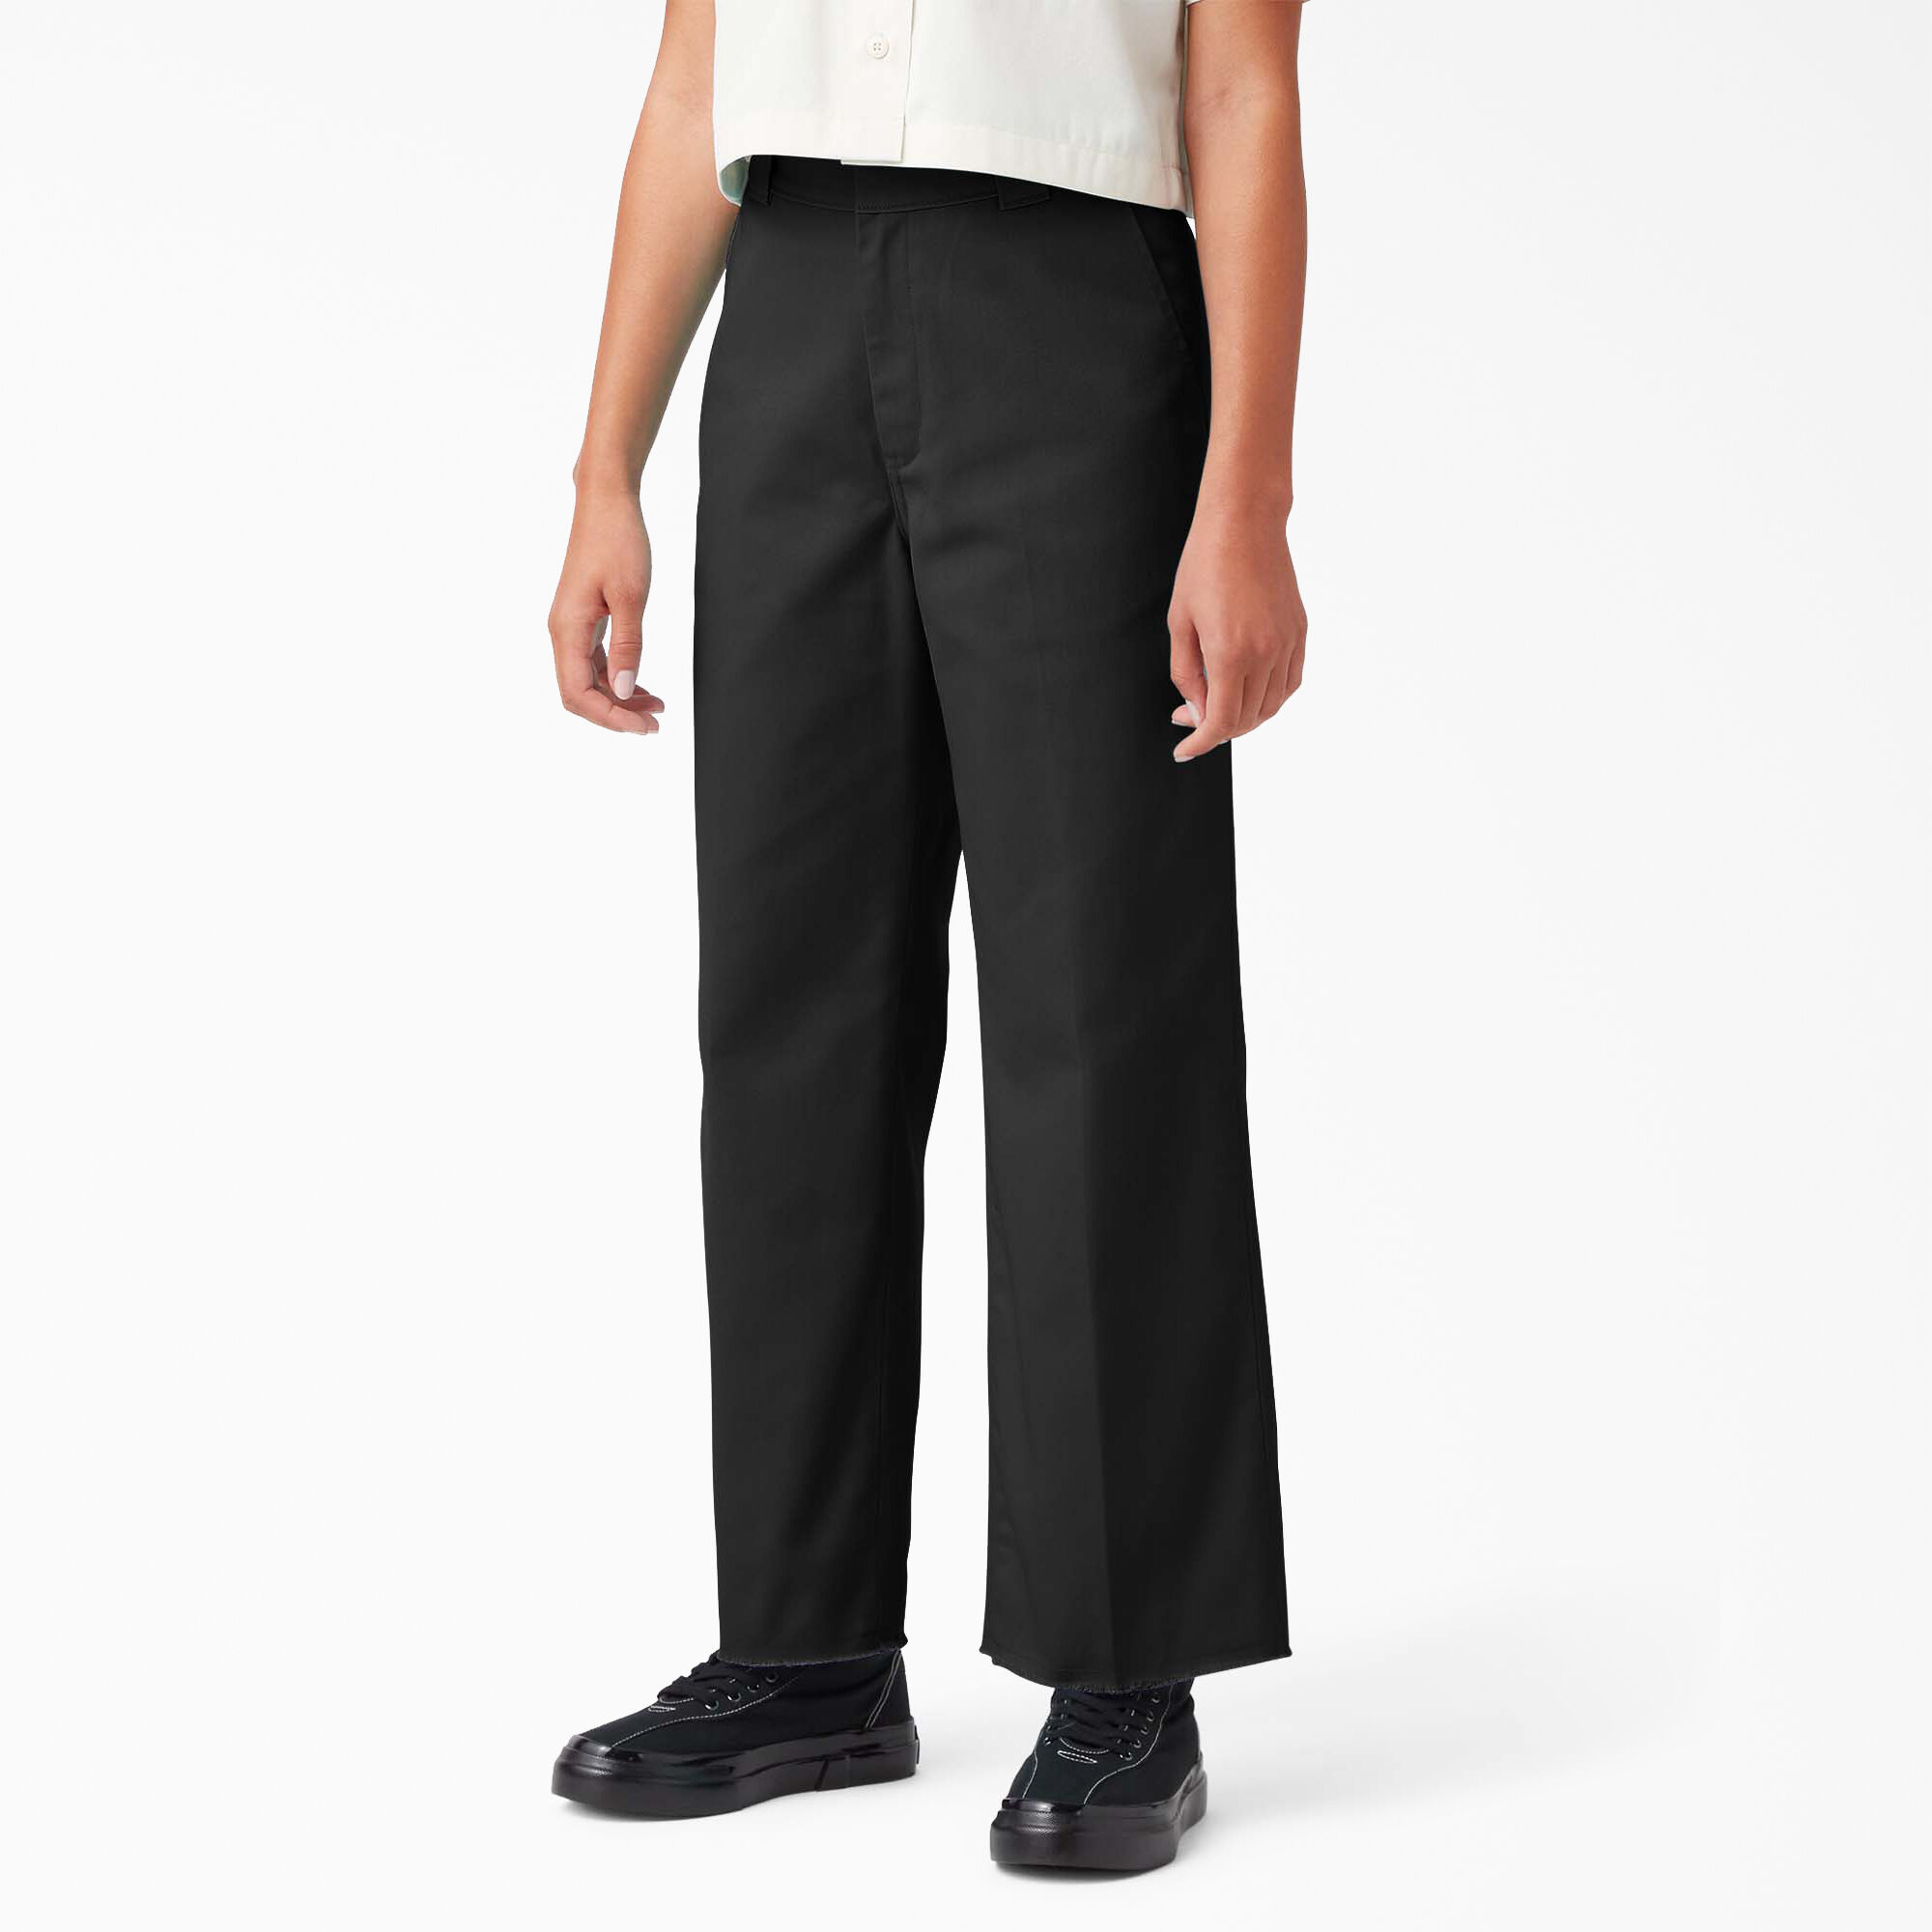 Dickies Women's Regular Fit Cropped Pants - Rinsed Chocolate Brown Size 2 (FPR10)